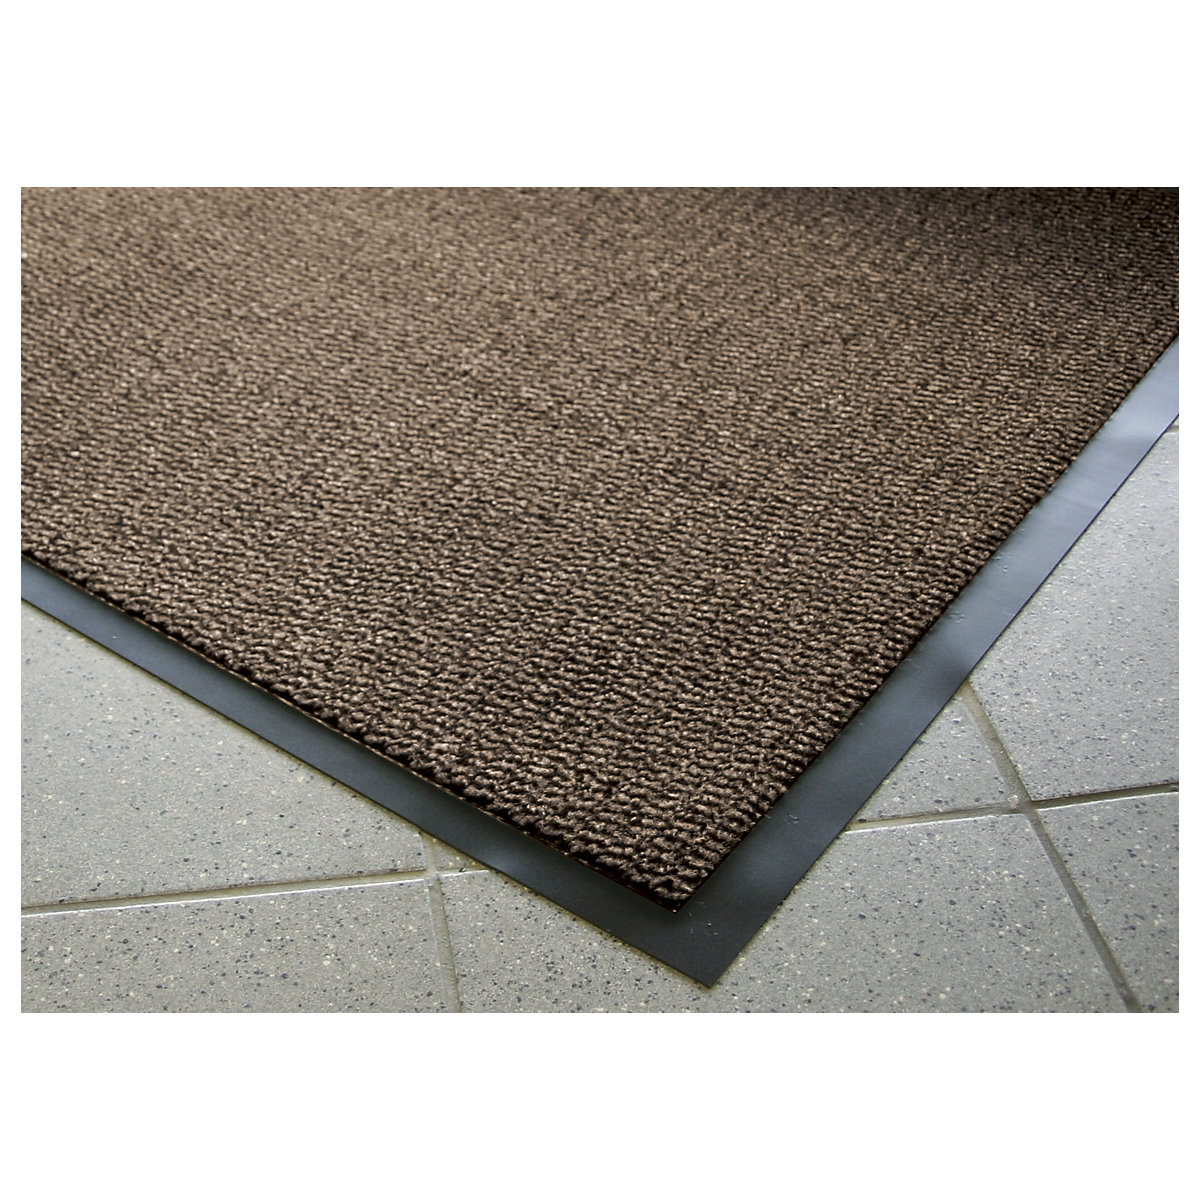 Entrance matting for indoor use, polypropylene pile, LxW 1800 x 1200 mm, black / brown